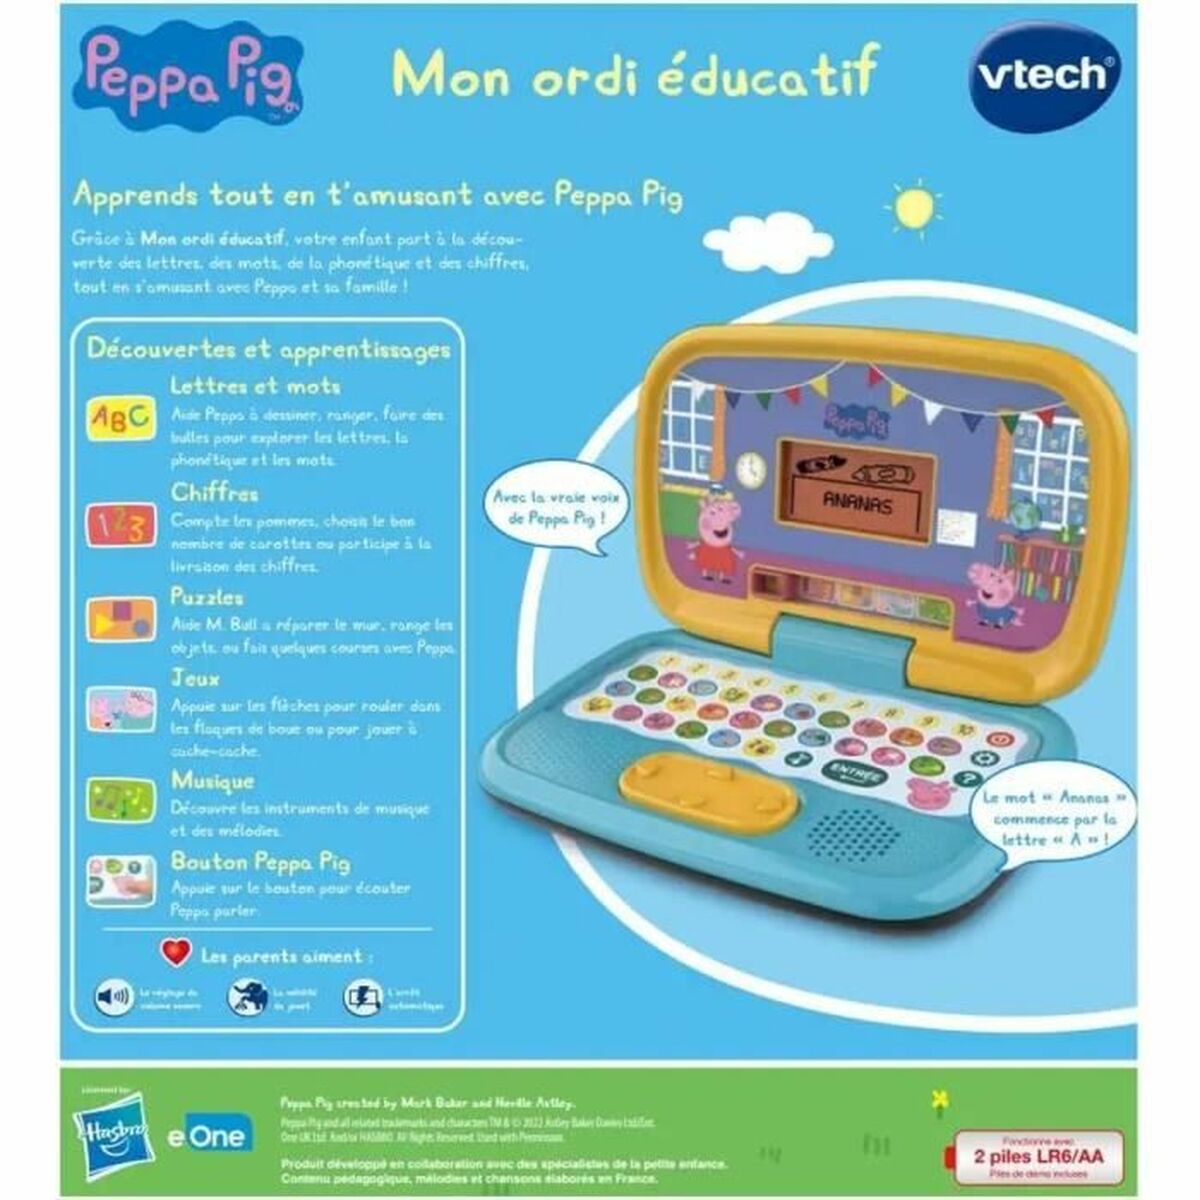 Komputer przenośny Vtech Peppa Pig 3-6 lat Interaktywna zabawka